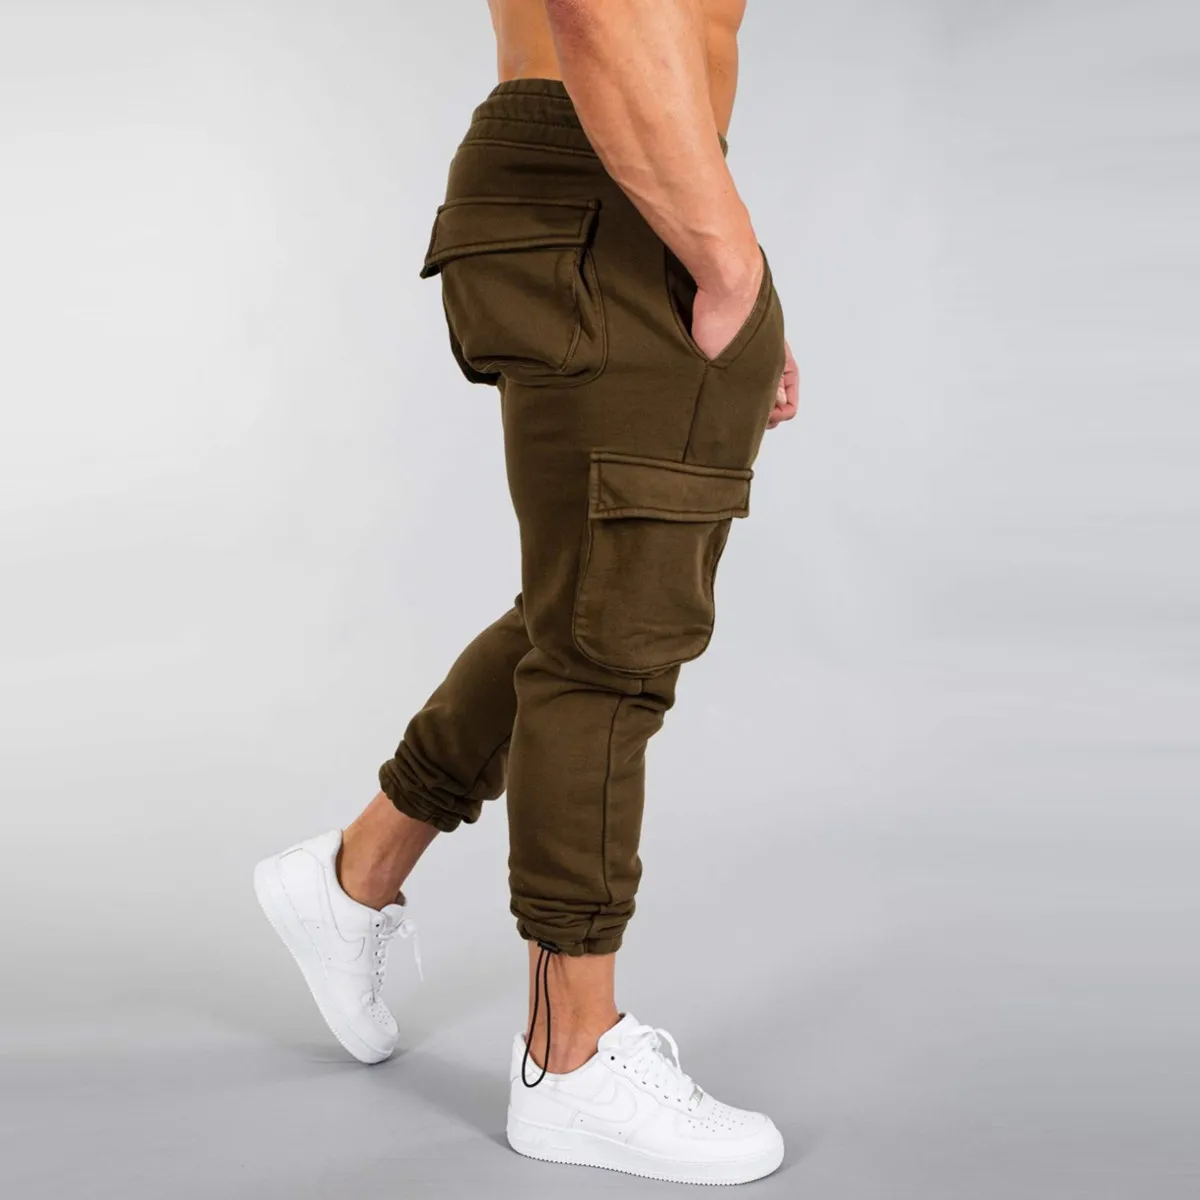 Joggers Sweatpants Men Autumn Casual Pants Gym Fitness Cotton Sportswear Trousers Male Multi-pocket Cargo Training Trackpants